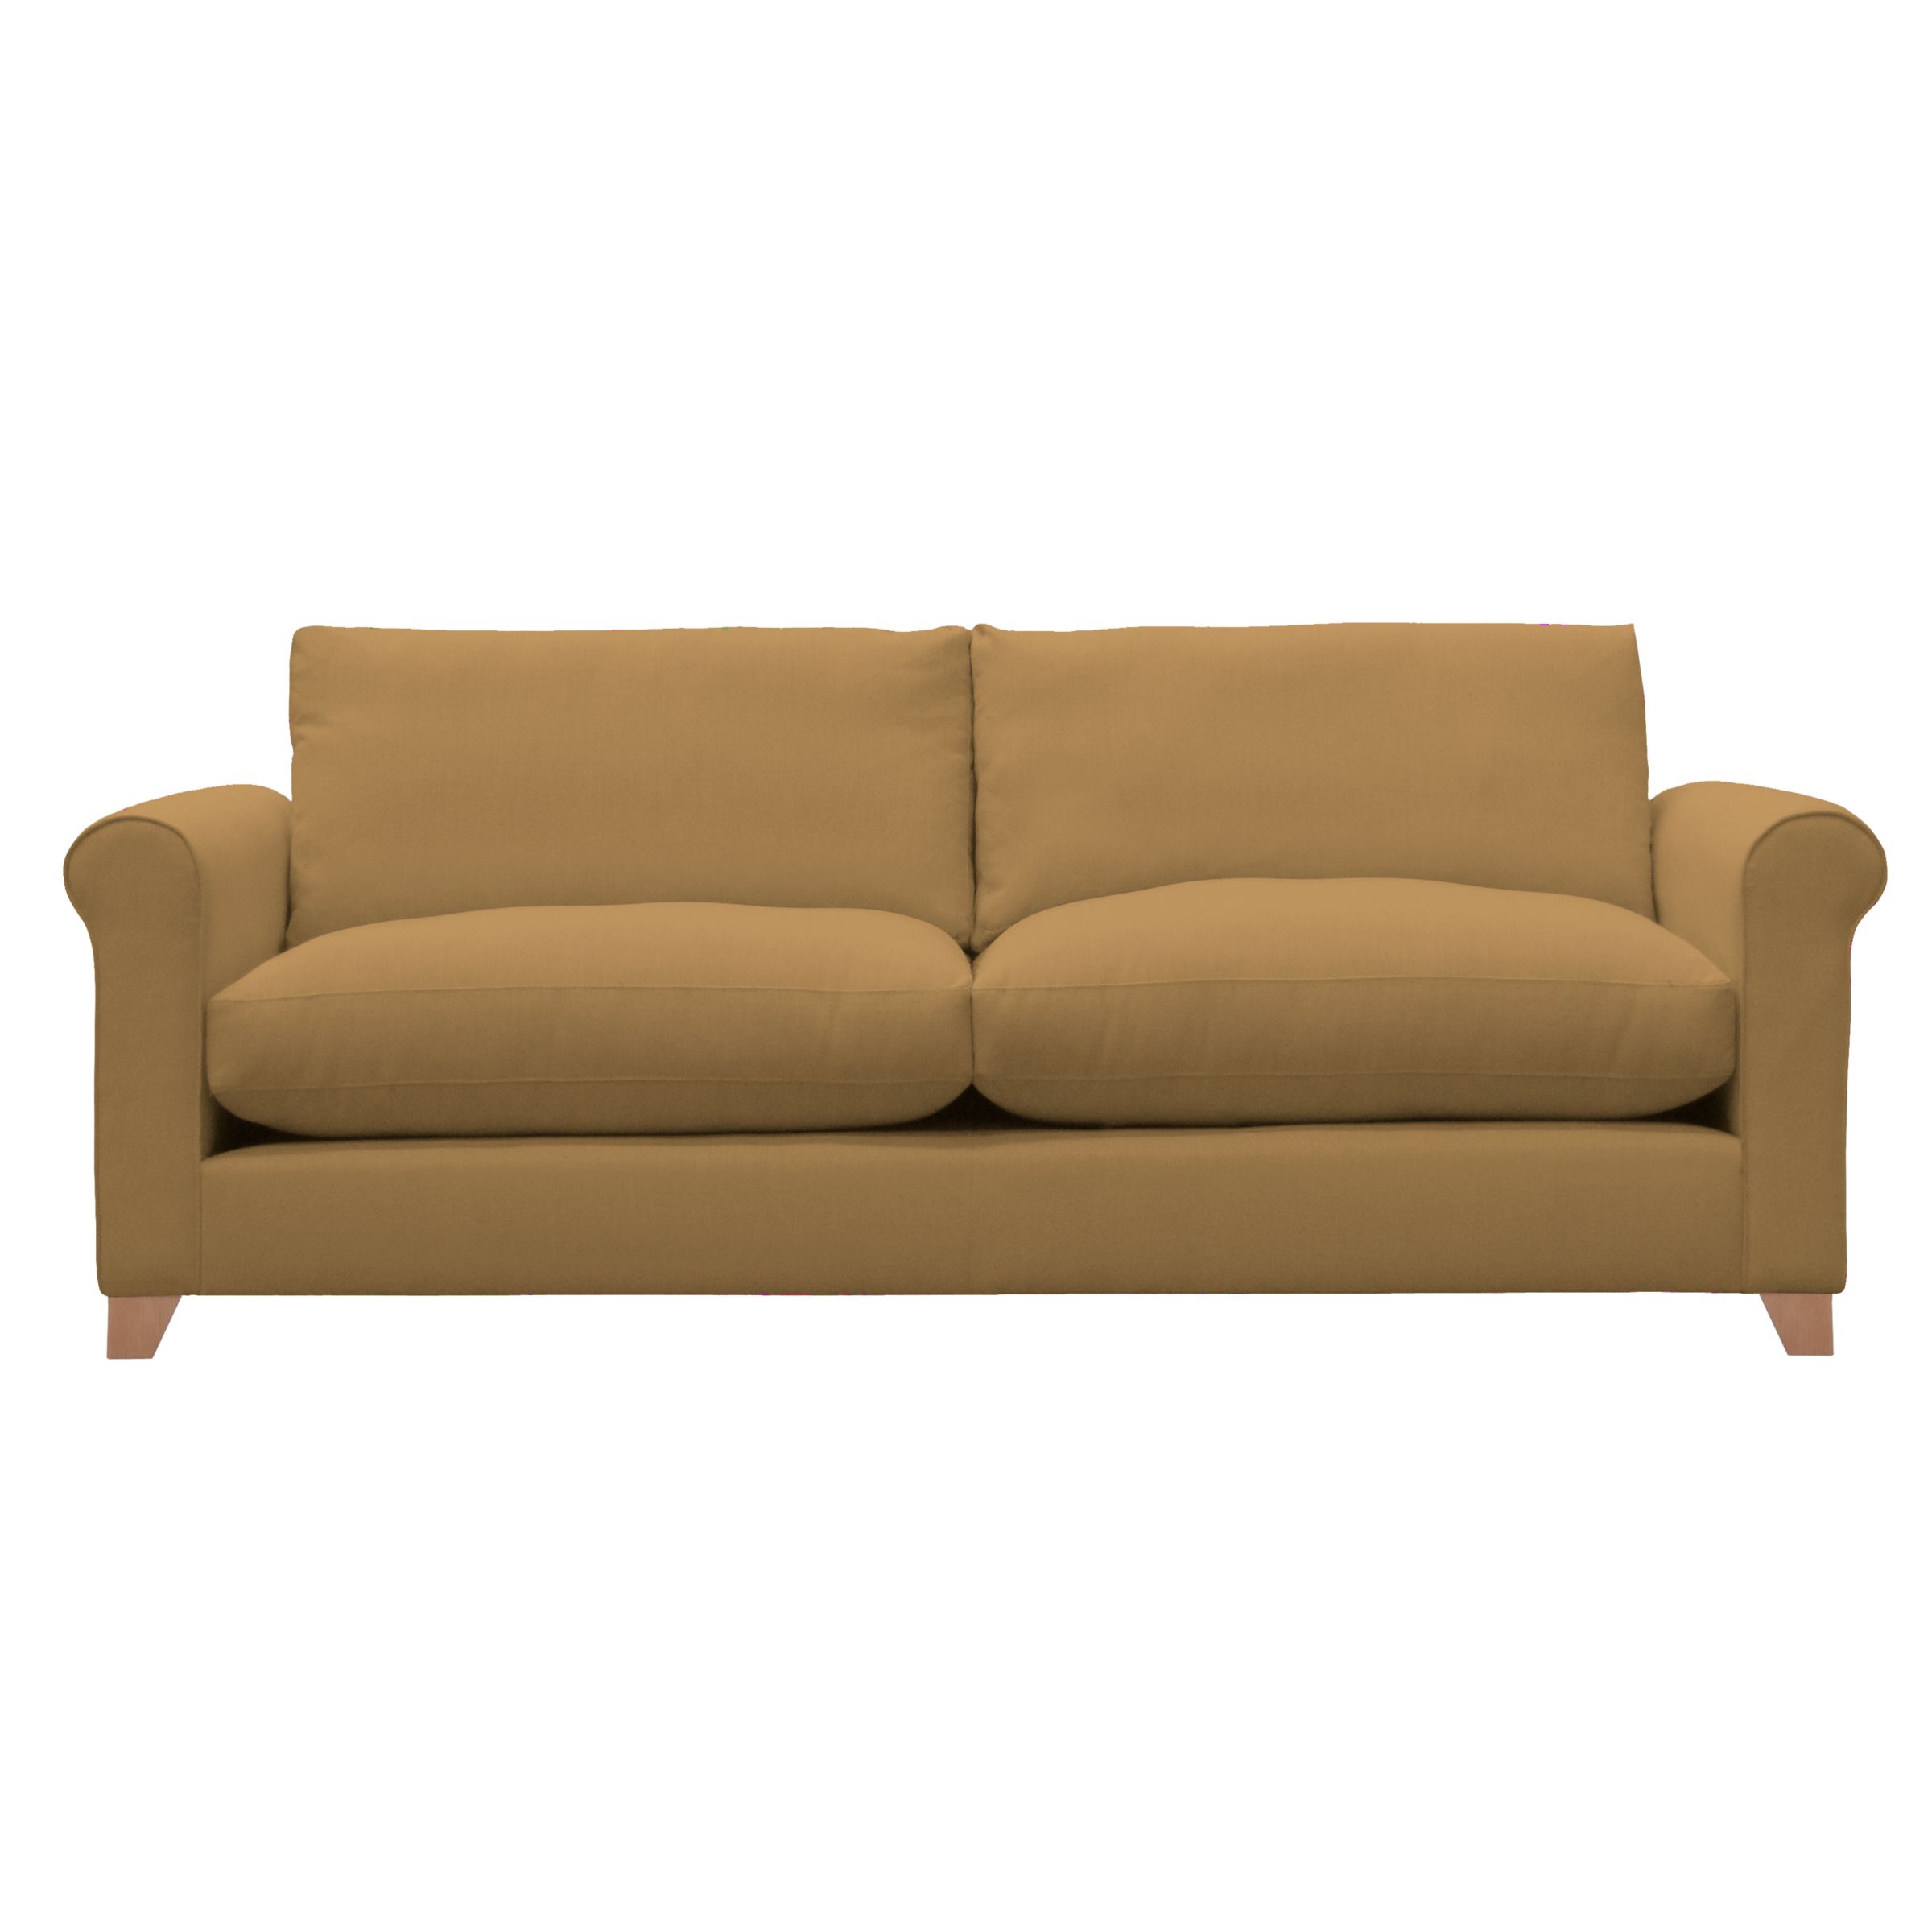 John Lewis Options Scroll Arm Grand Sofa, Linley Cafe, width 217cm